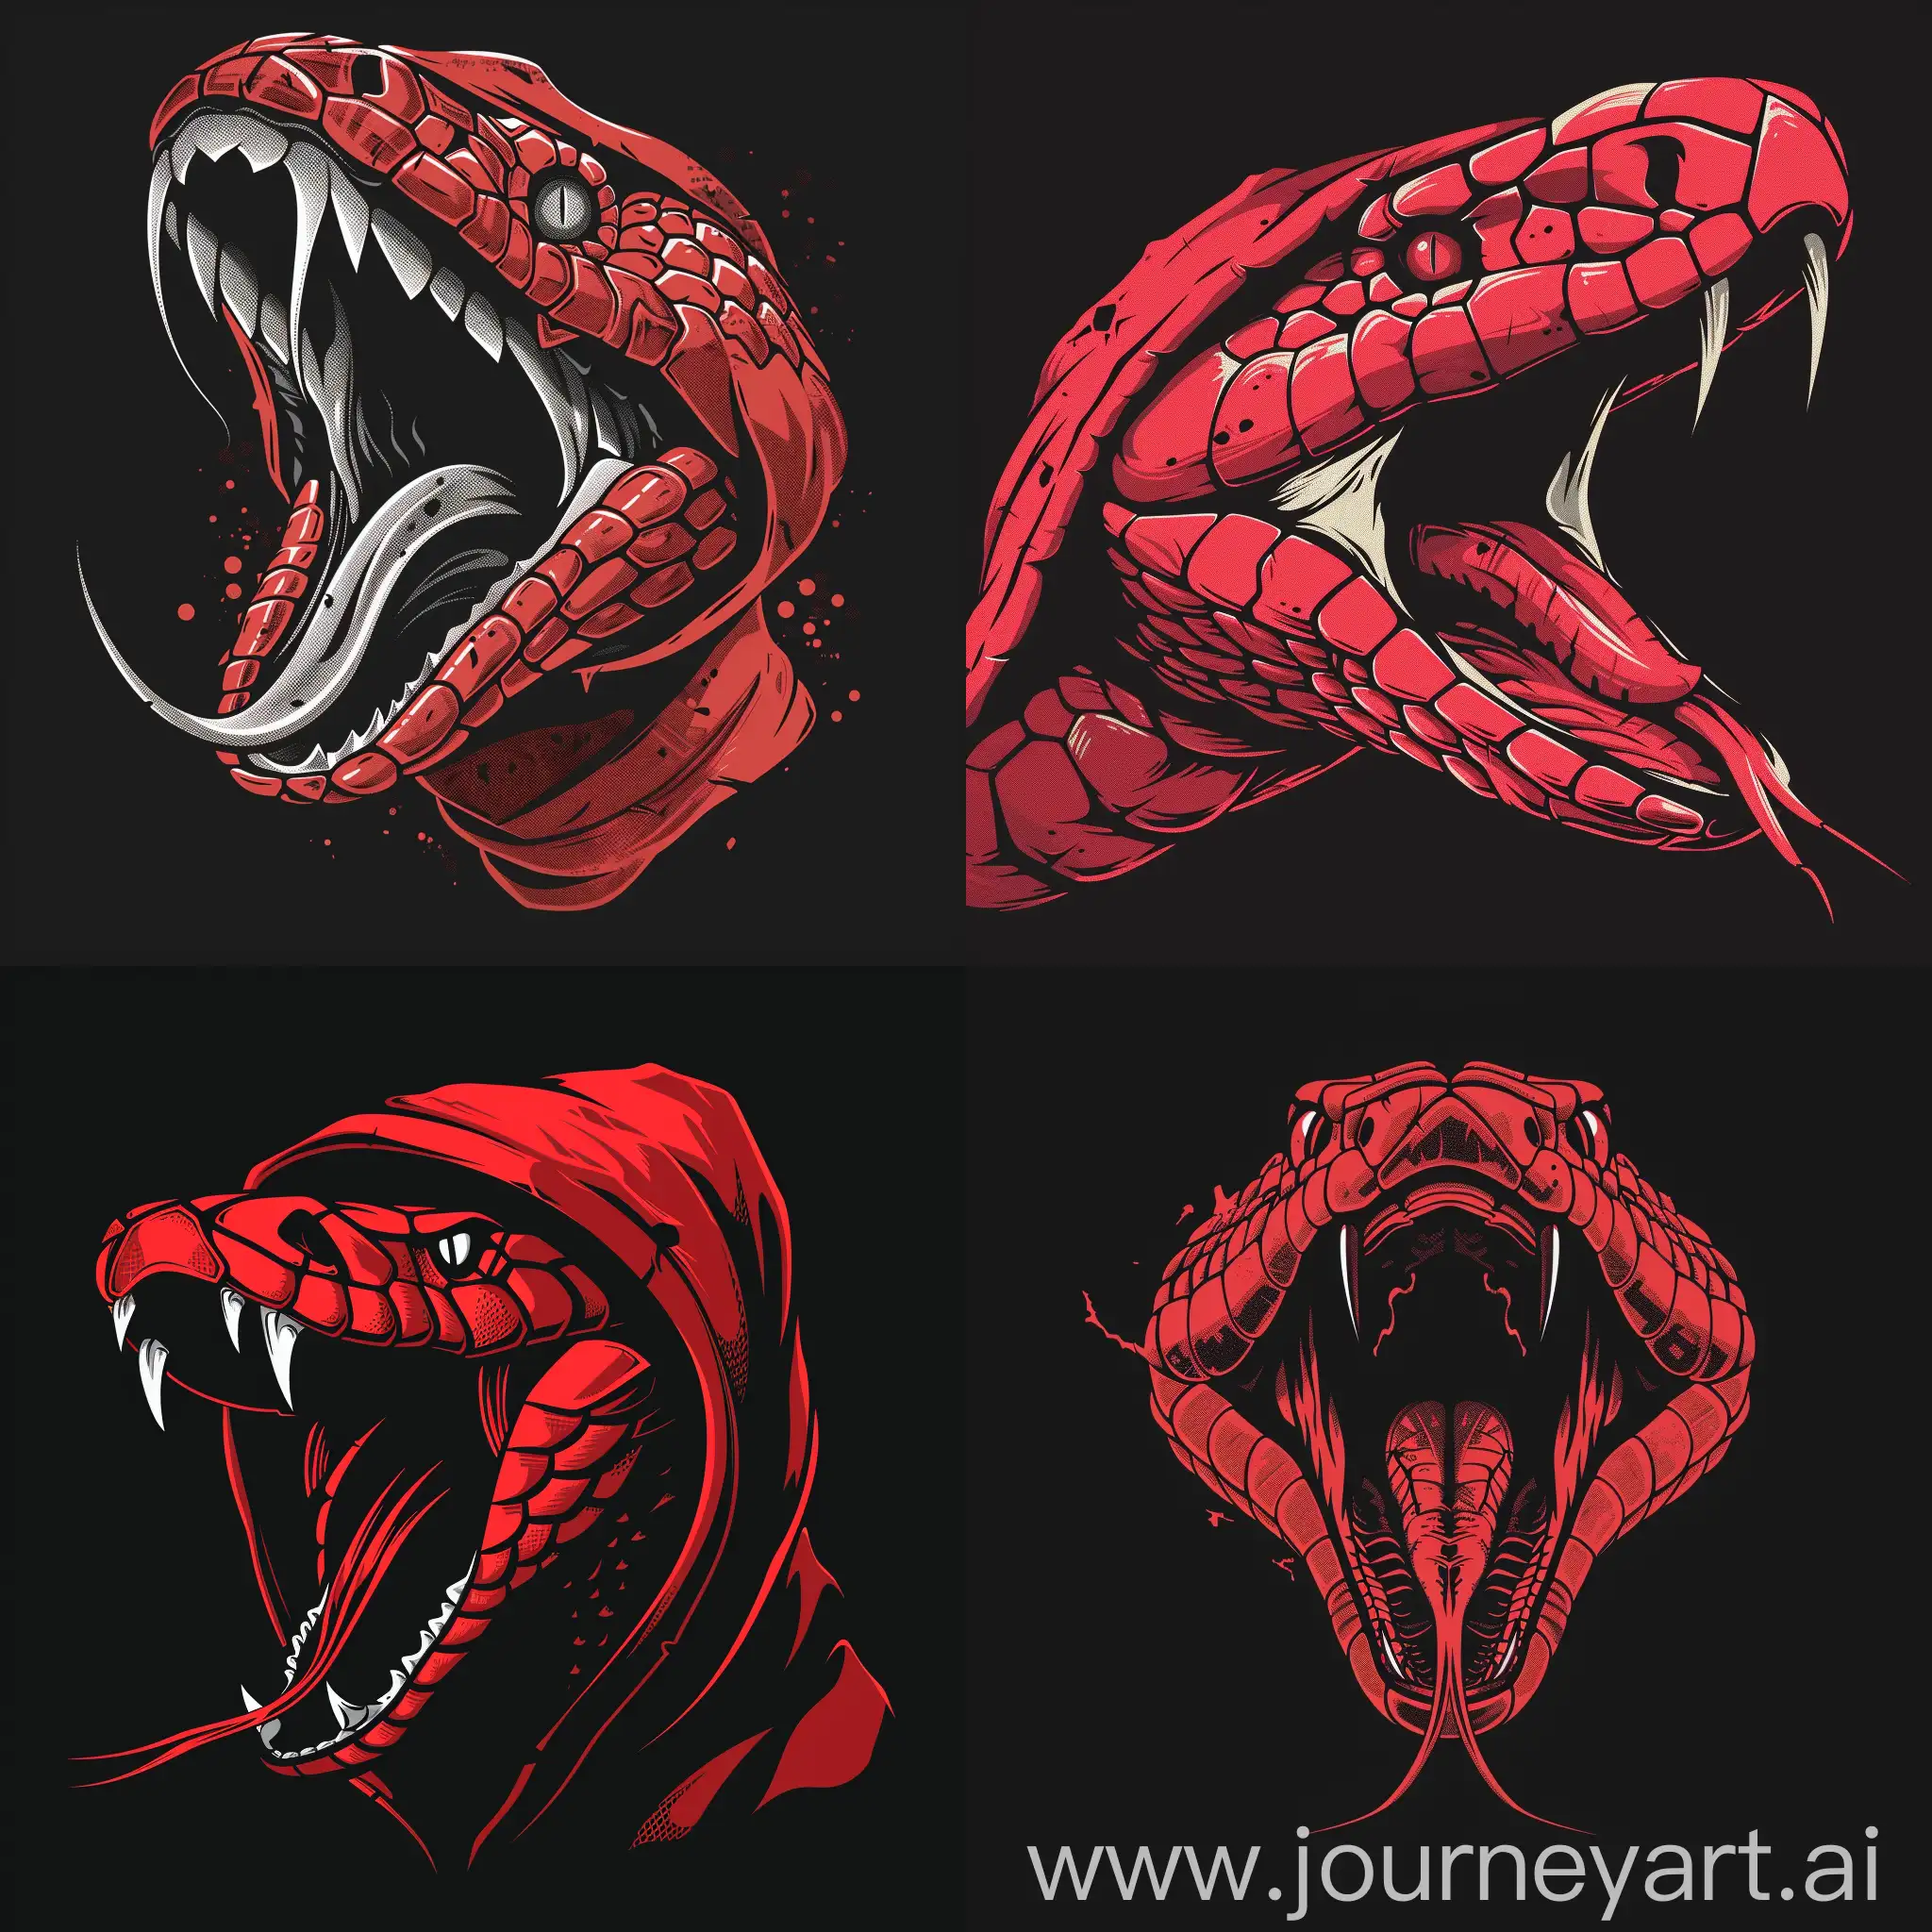 Cobra-Skull-with-Brutal-Angular-Design-on-Black-Background